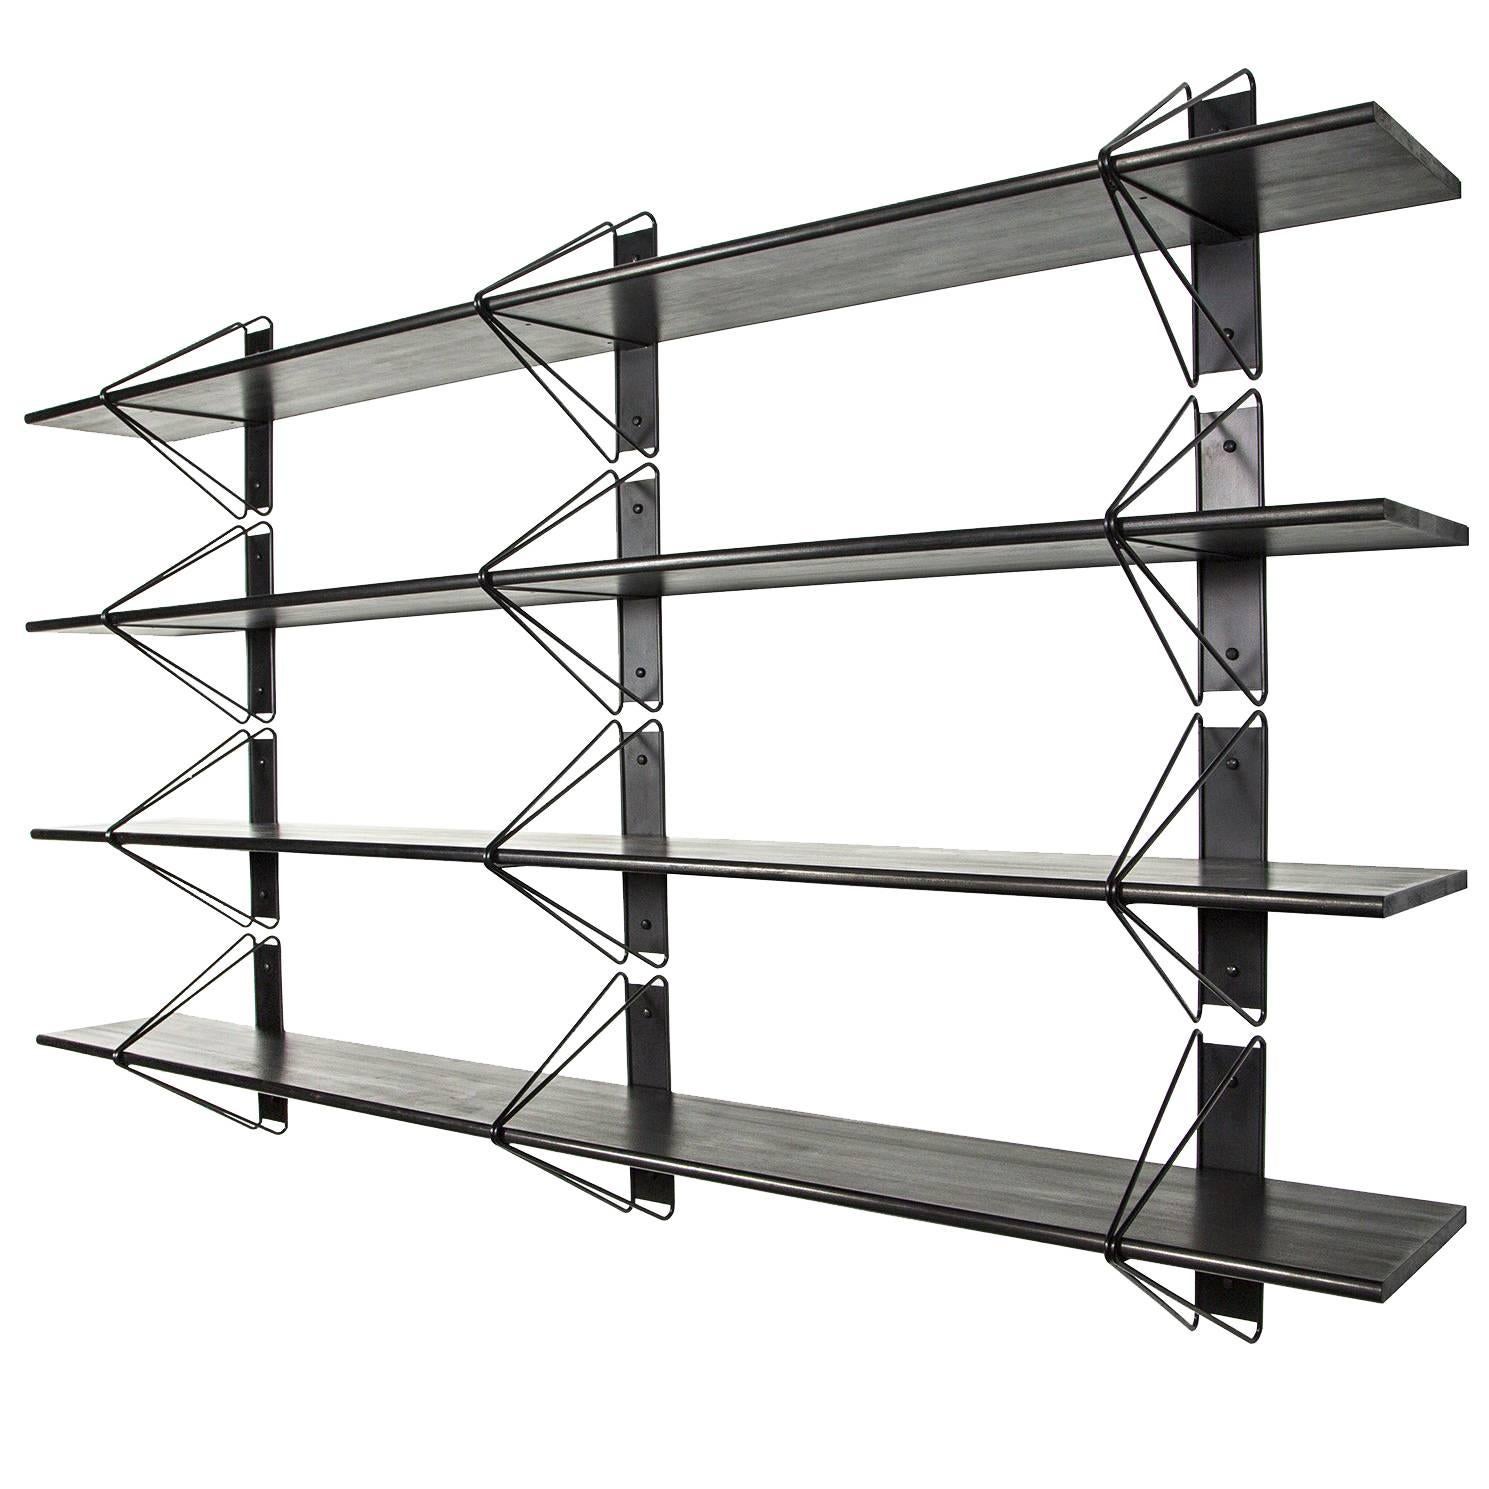 Set of 4 Strut Shelves from Souda, Black, Made to Order